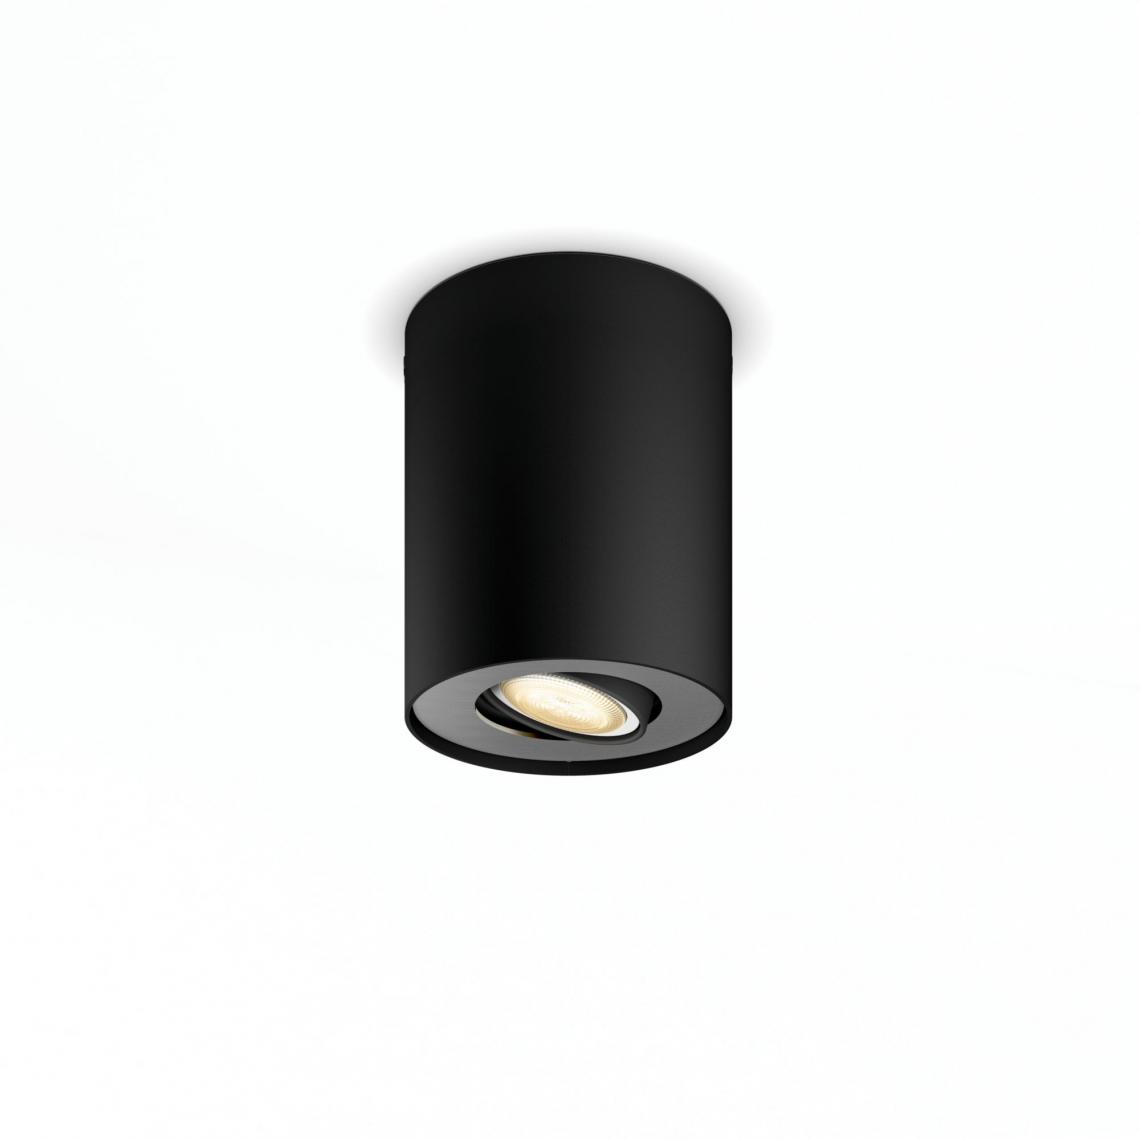 Philips - Luminaire Hue PILLAR Noir x1+tlc - Lampe connectée